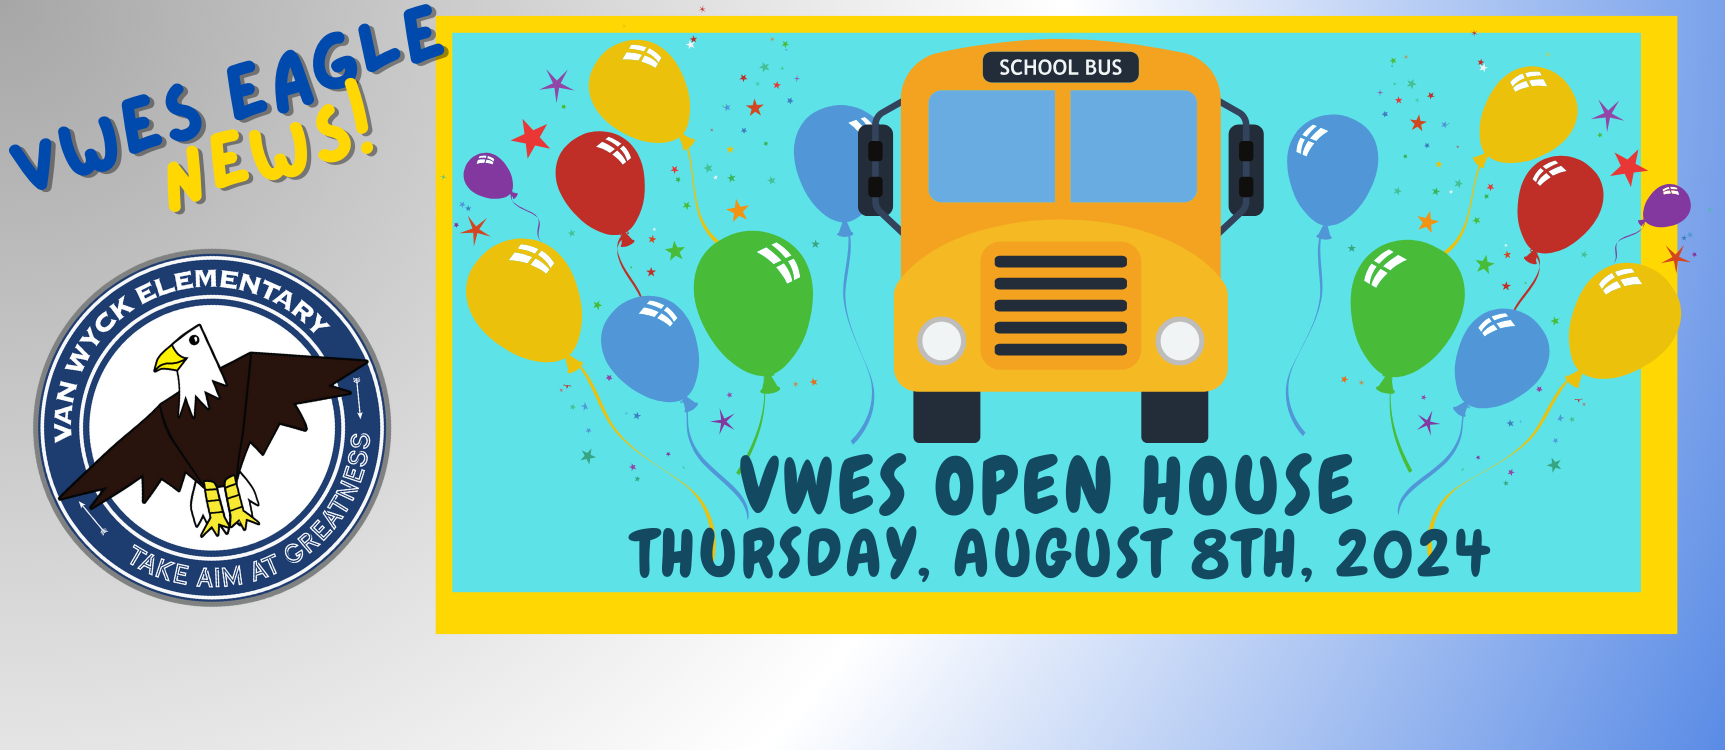 Van Wyck Elementary- Open House Thursday August 8th. 